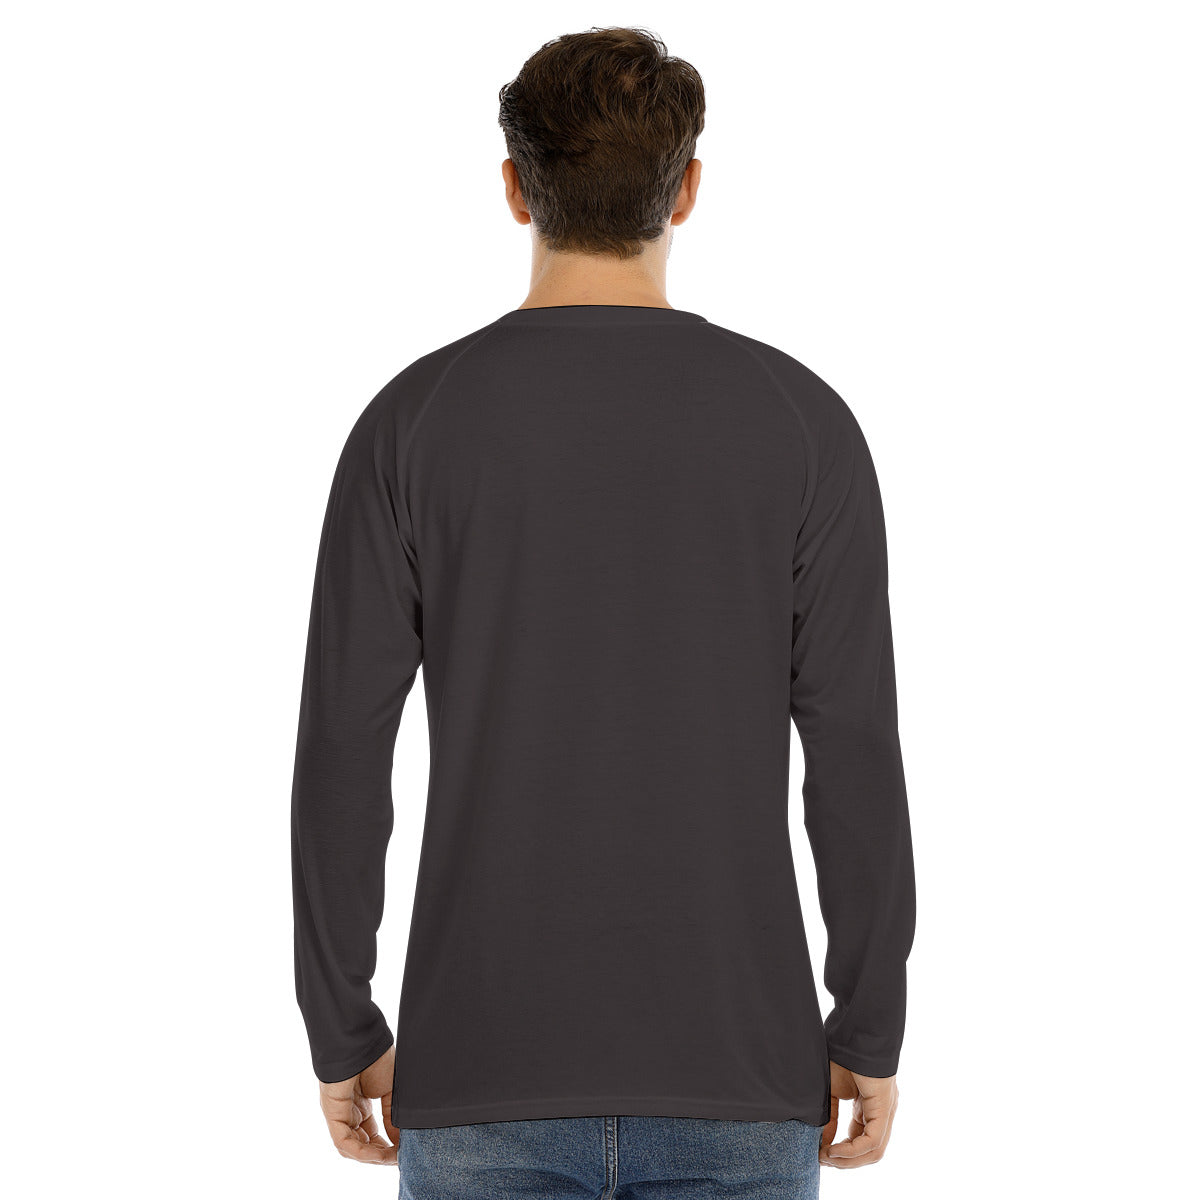 Rave 105 -- Men's Long Sleeve T-shirt With Raglan Sleeve